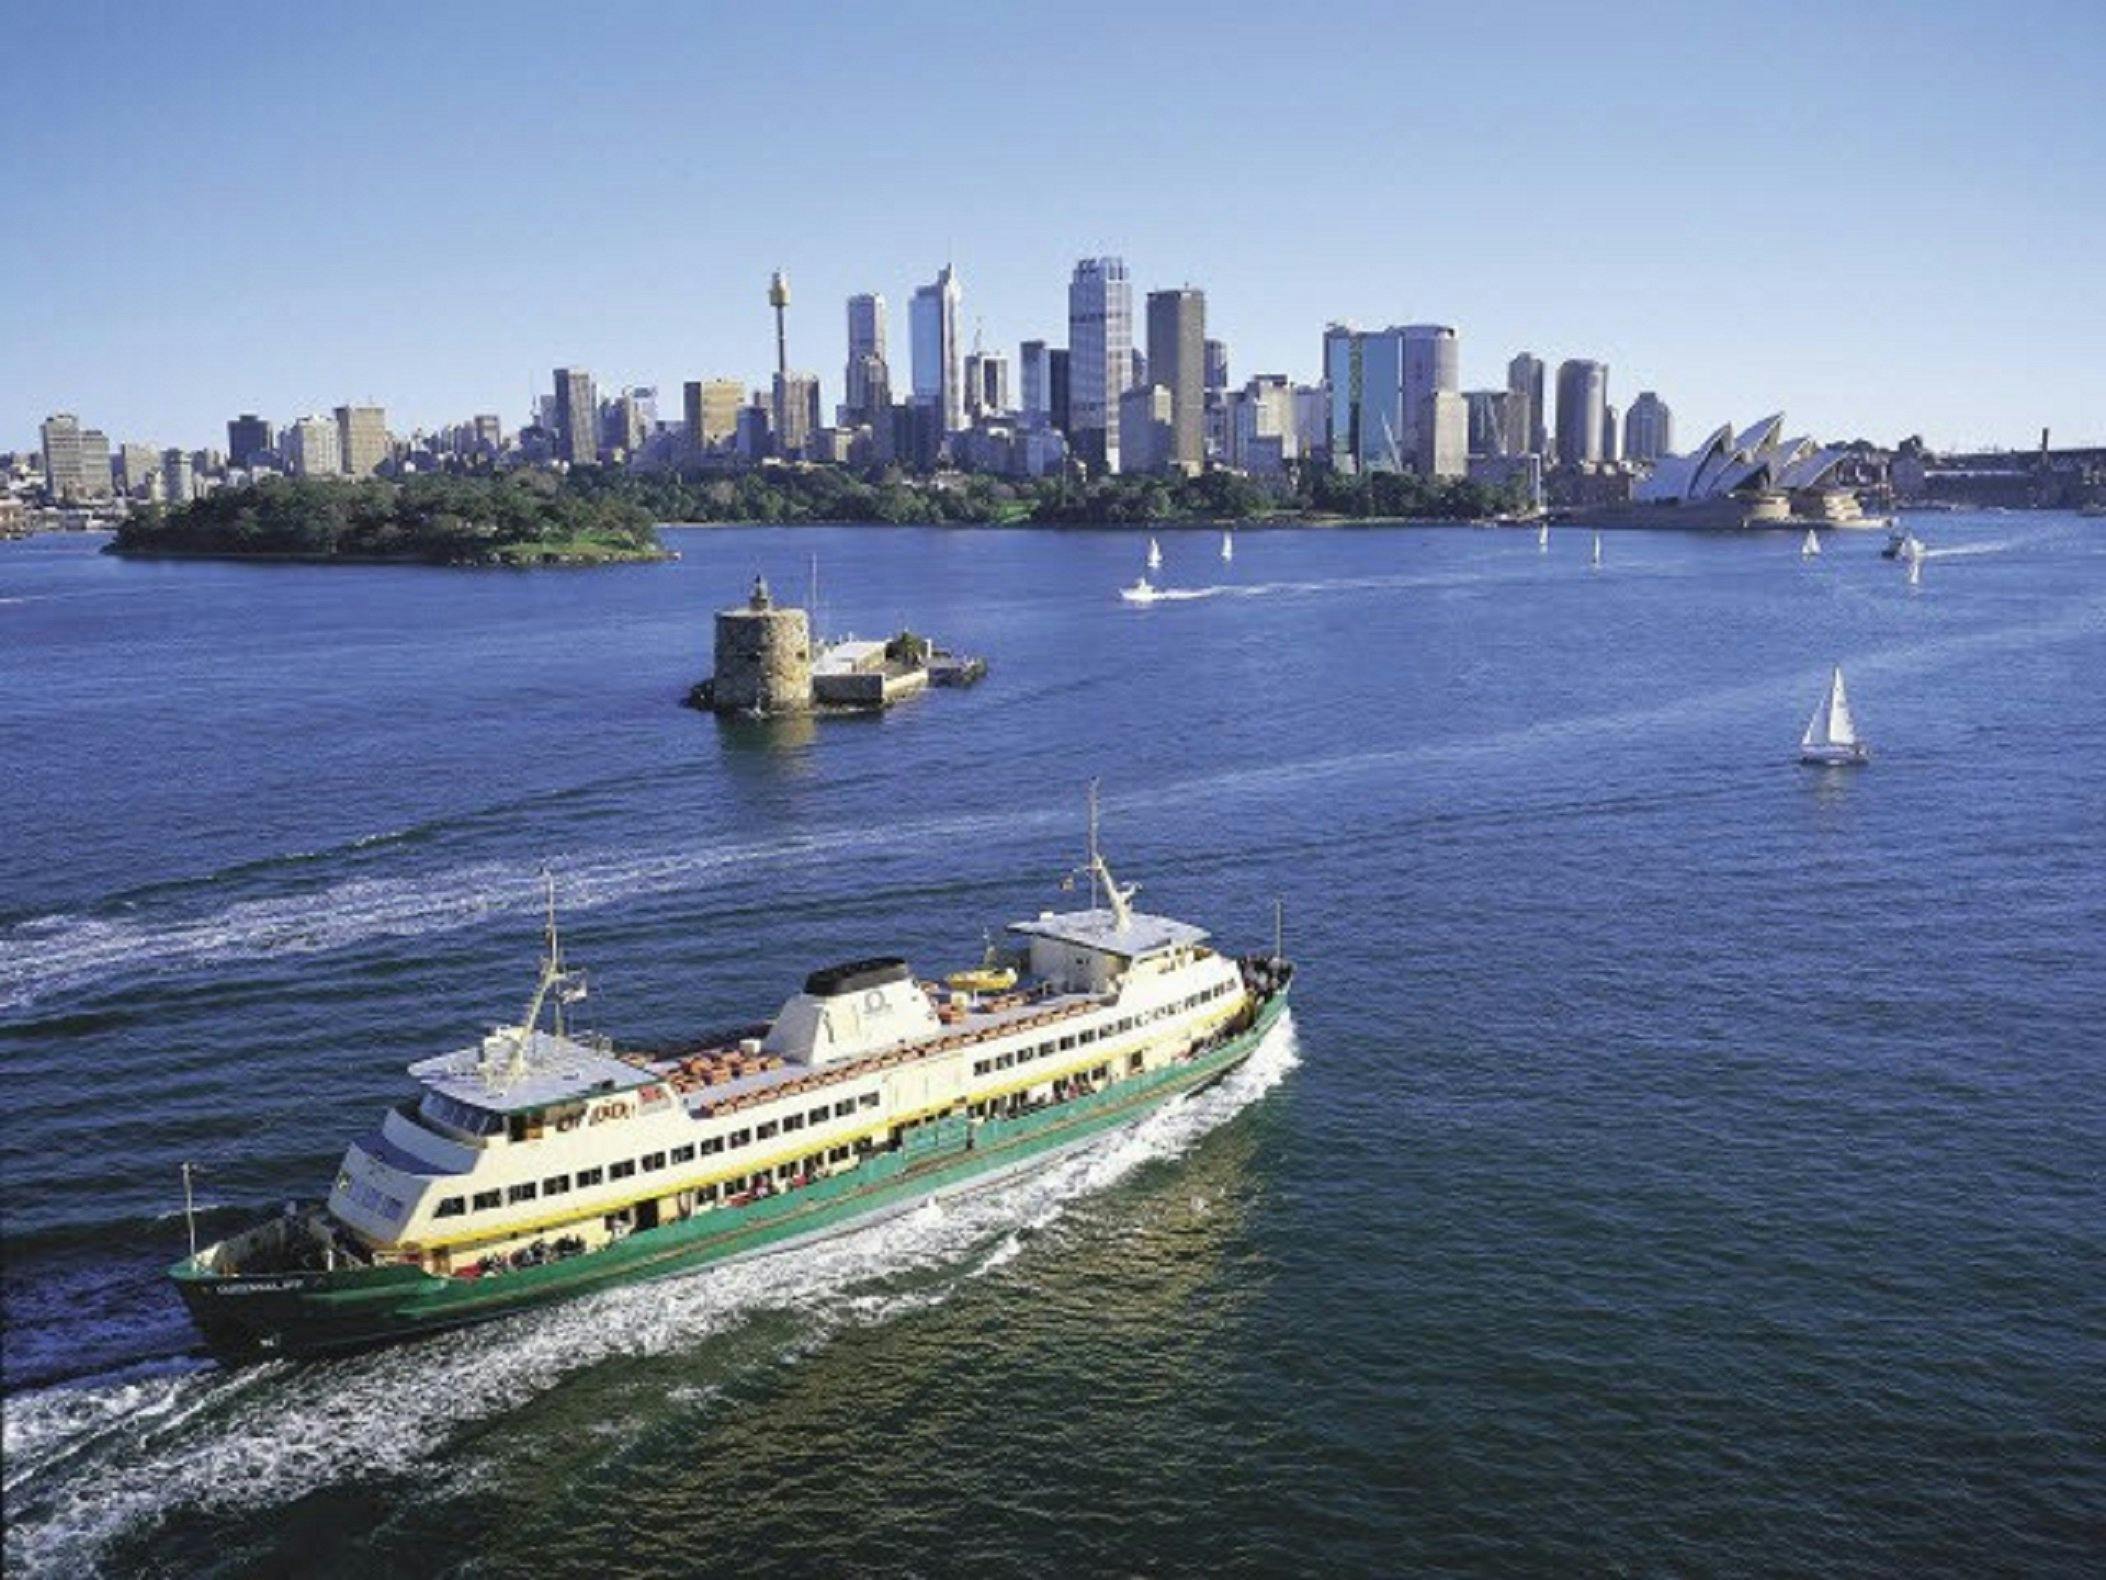 Sydney Ferries